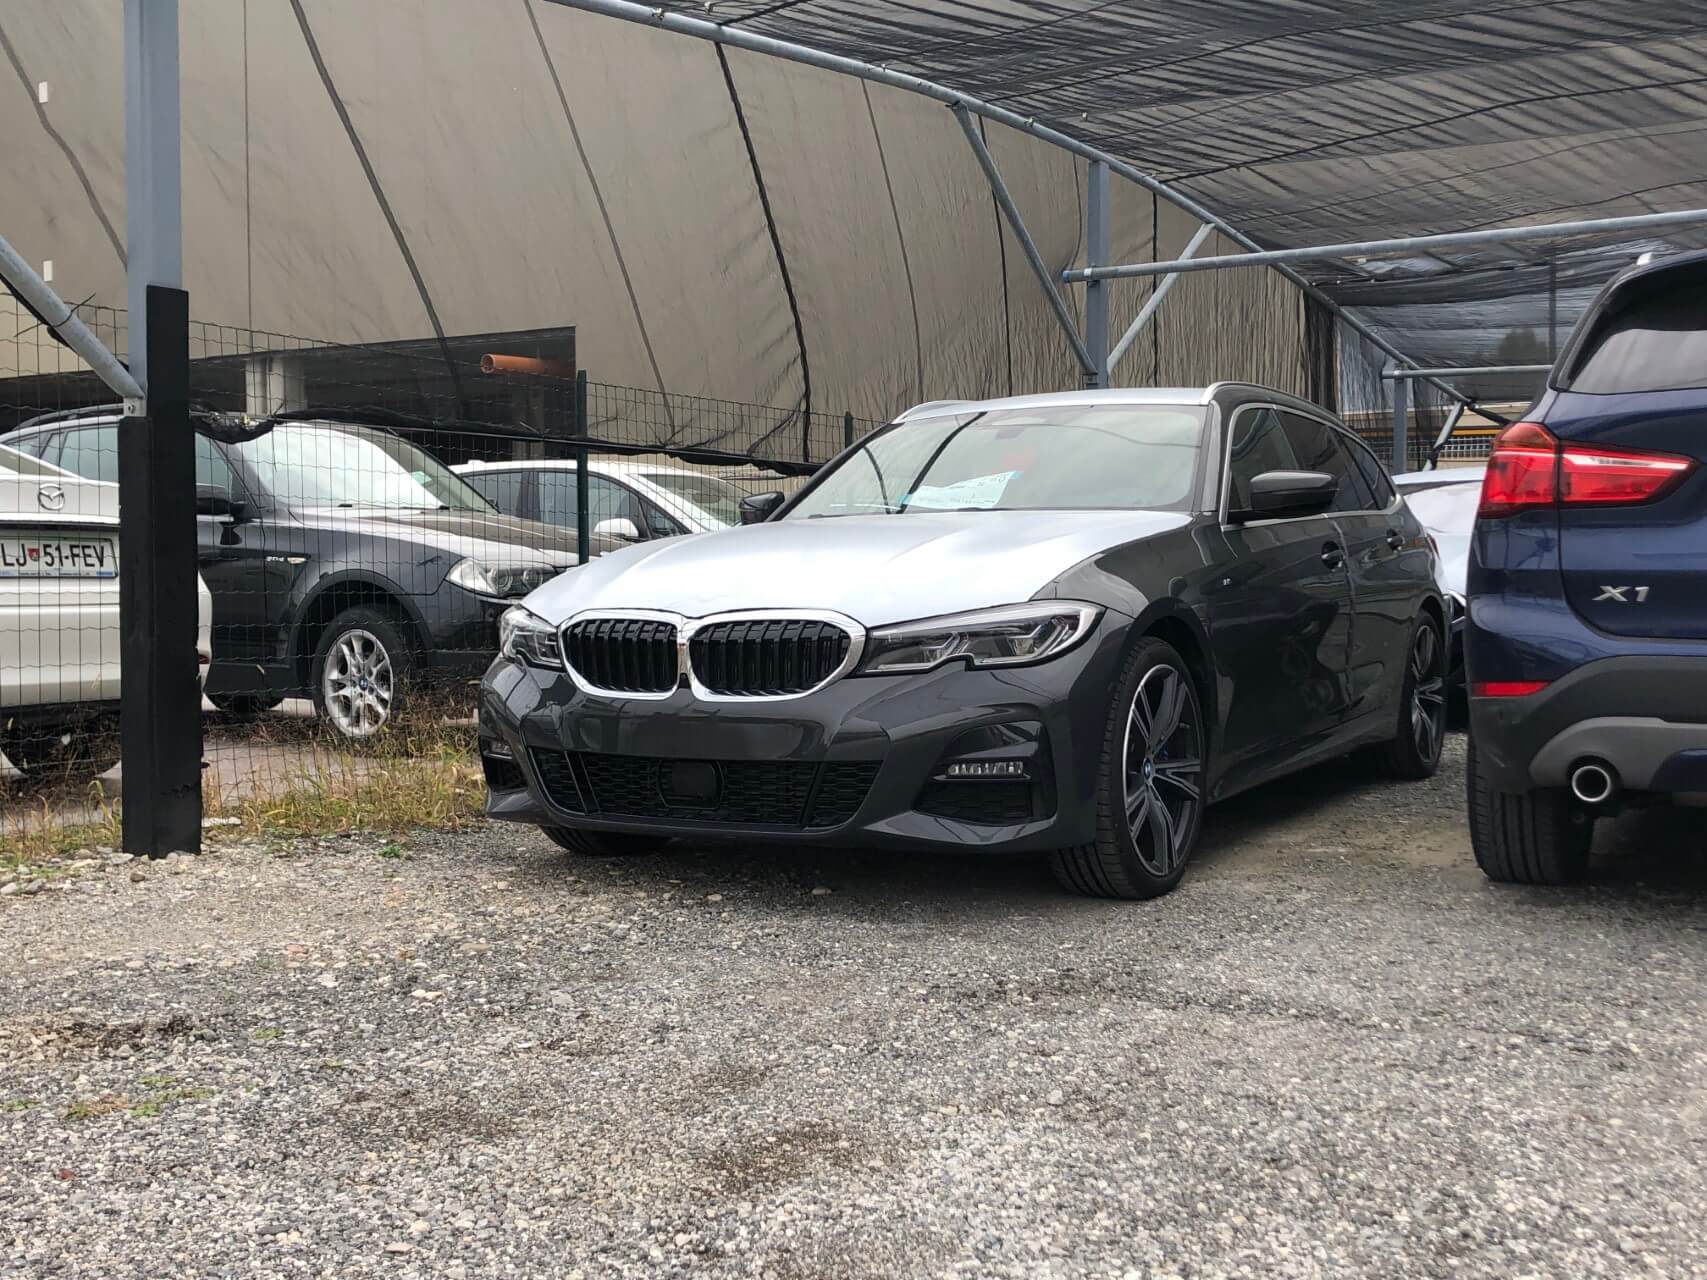 OPAŽENO: Prvi BMW serije 3 Touring z oznako 330d v Sloveniji!